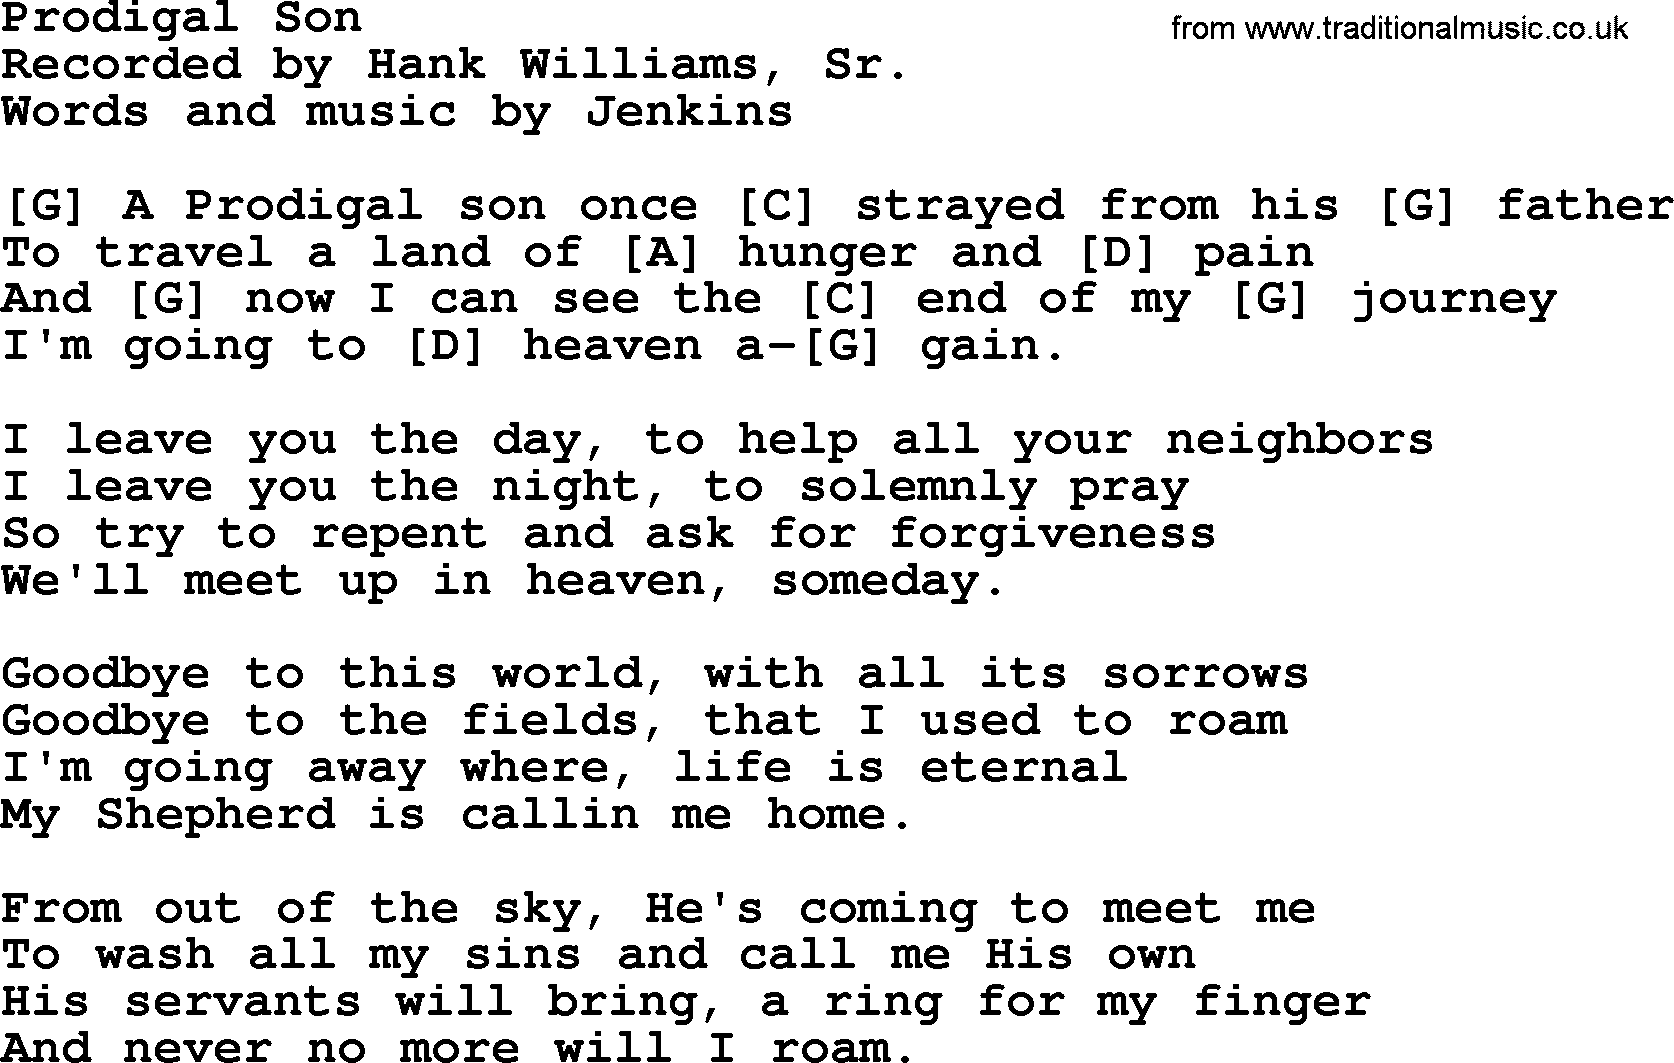 Hank Williams song Prodigal Son, lyrics and chords